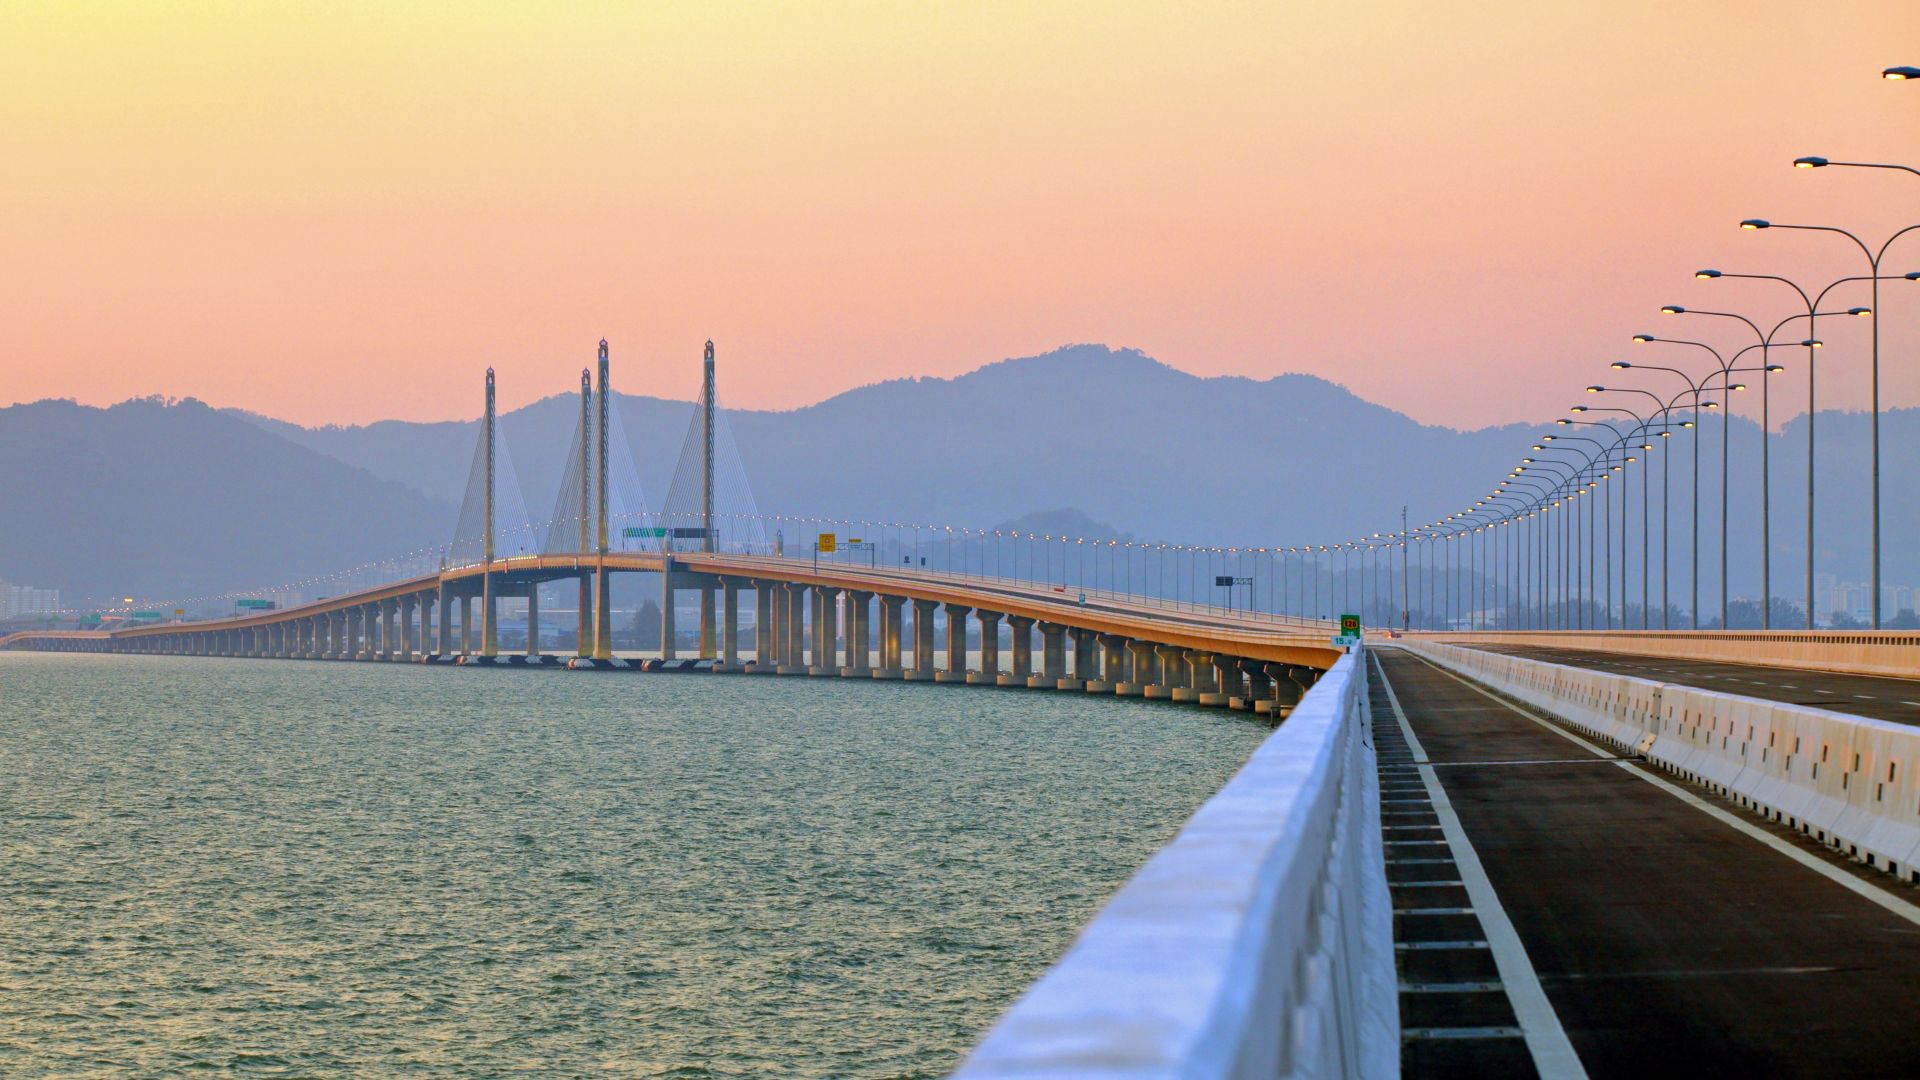 Second Penang Bridge in Malaysia at sunset